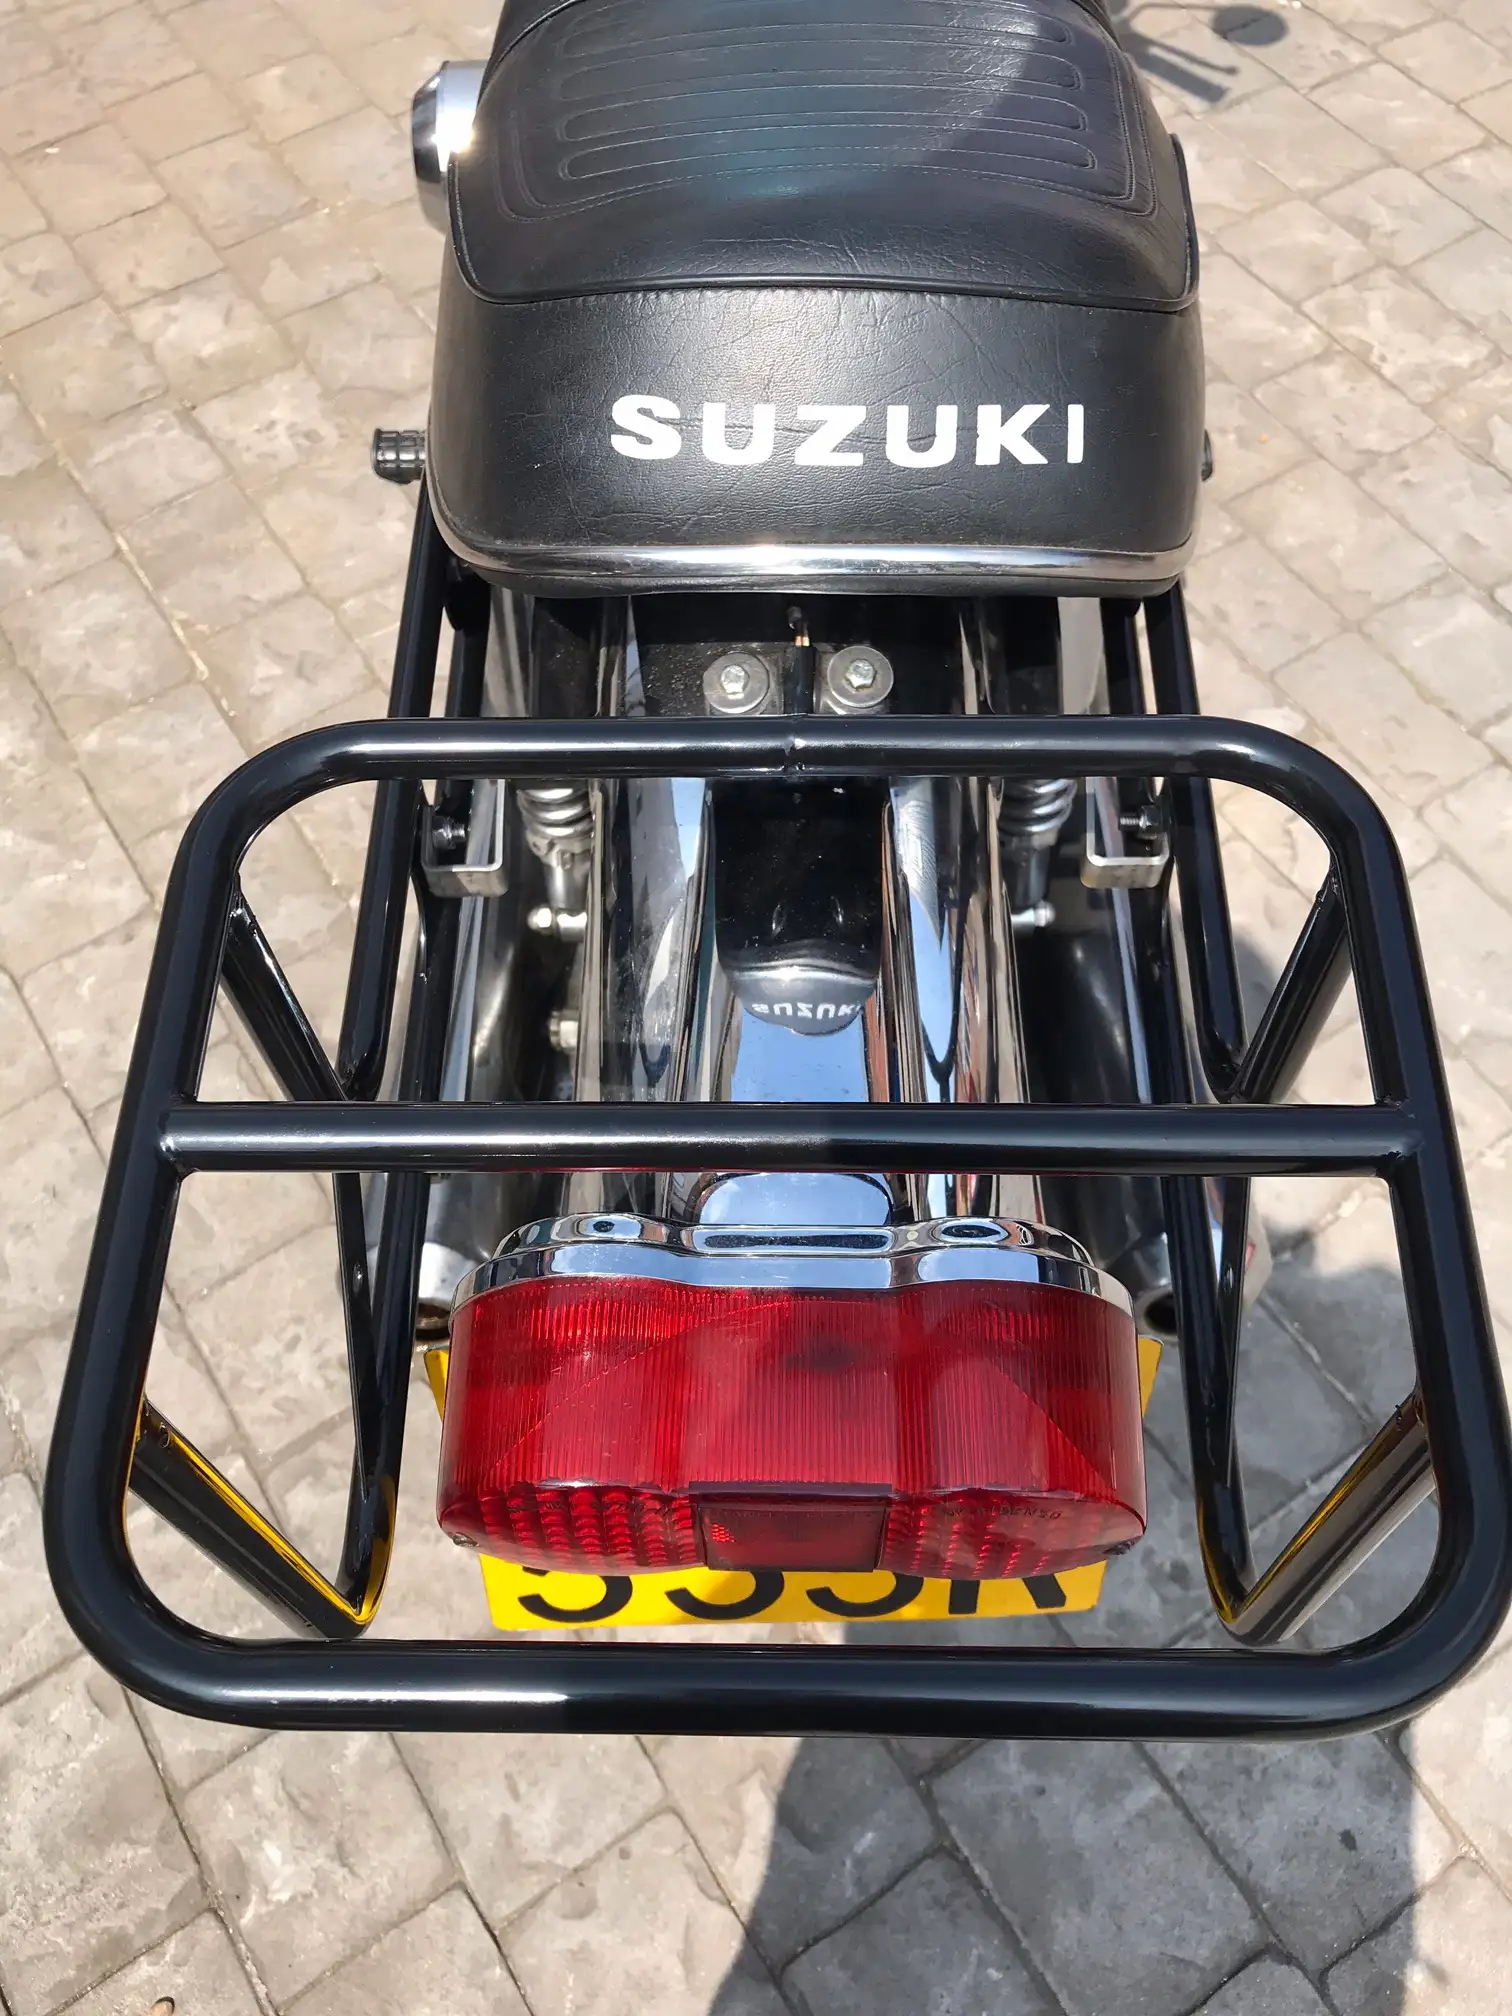 Sunny 1/24 Suzuki GT750 & Yamaha TX750 Vintage Plastic Model Kit